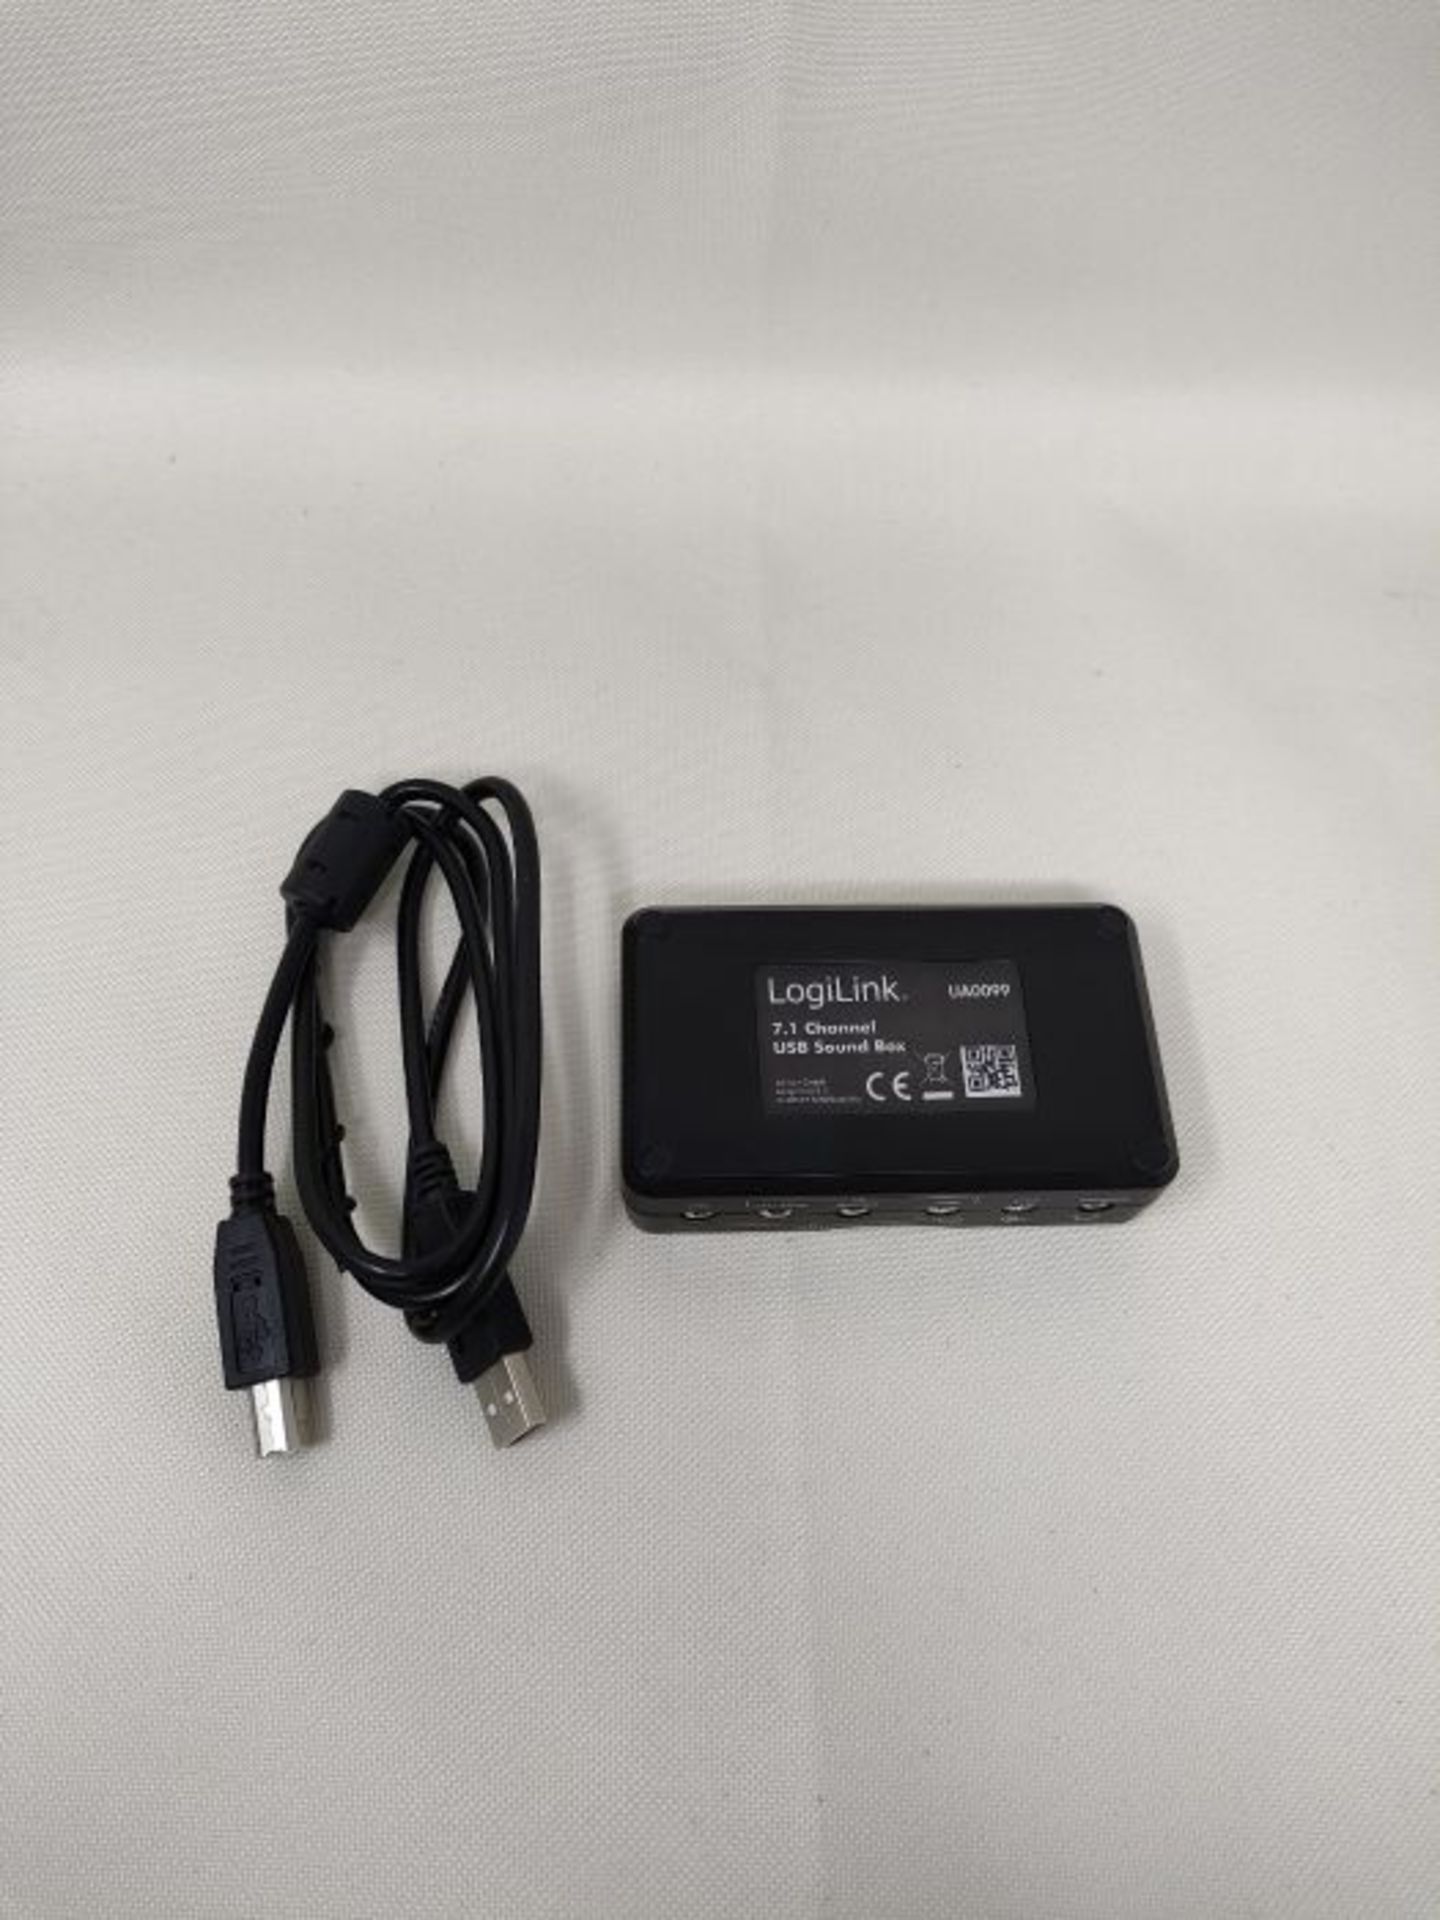 Logilink USB 2.0 7.1 Channel Sound Box - Image 3 of 3